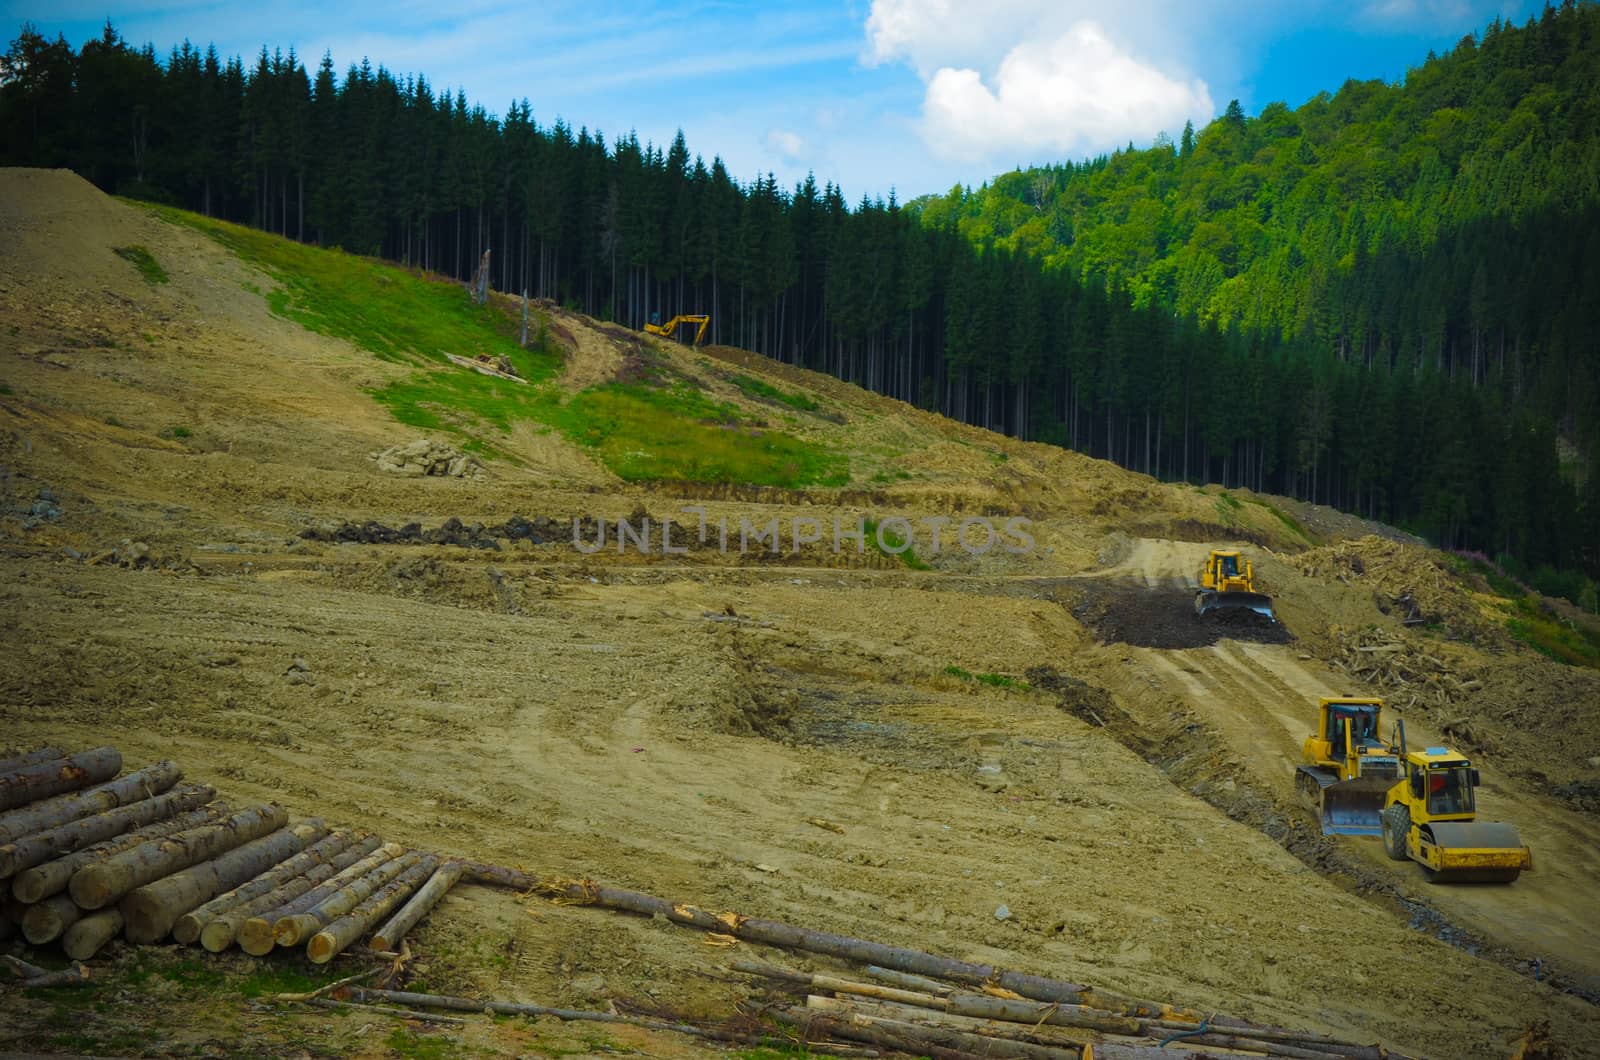 Deforestation environmental problem, forest destroyed for building resort by kimbo-bo